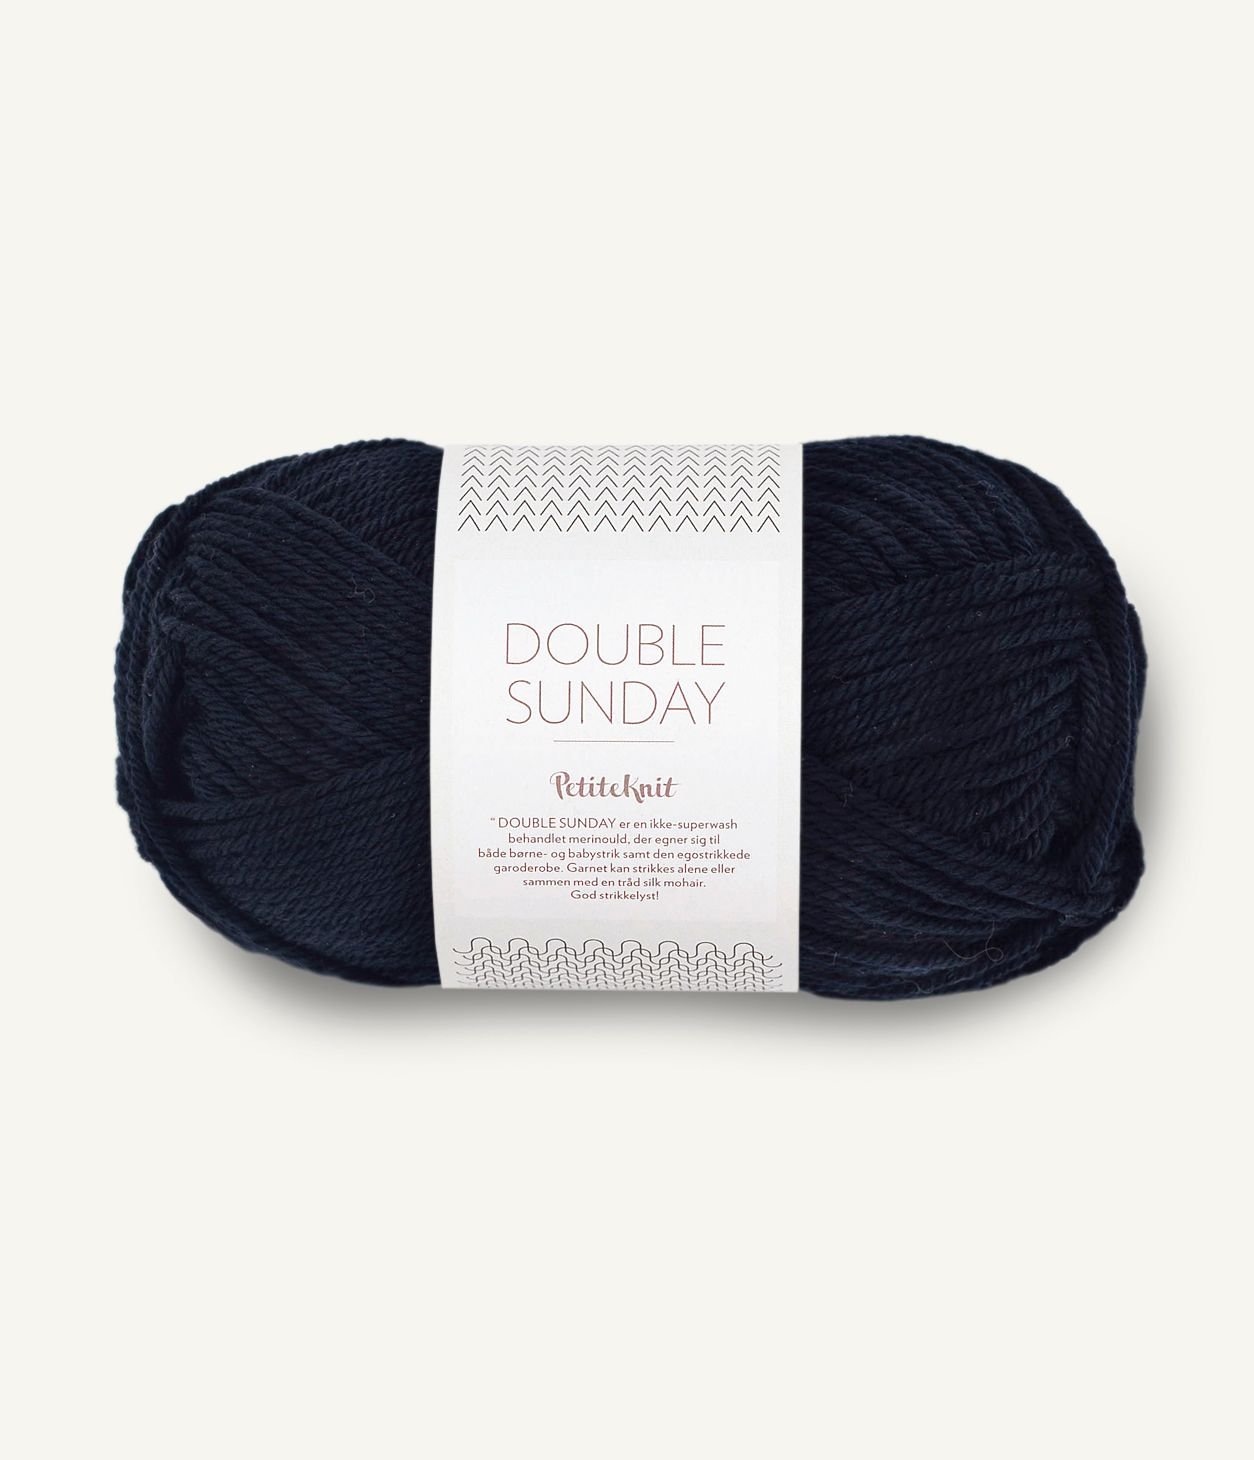 sandnes garn double Sunday by petiteknit yarn sailor in the dark #5581